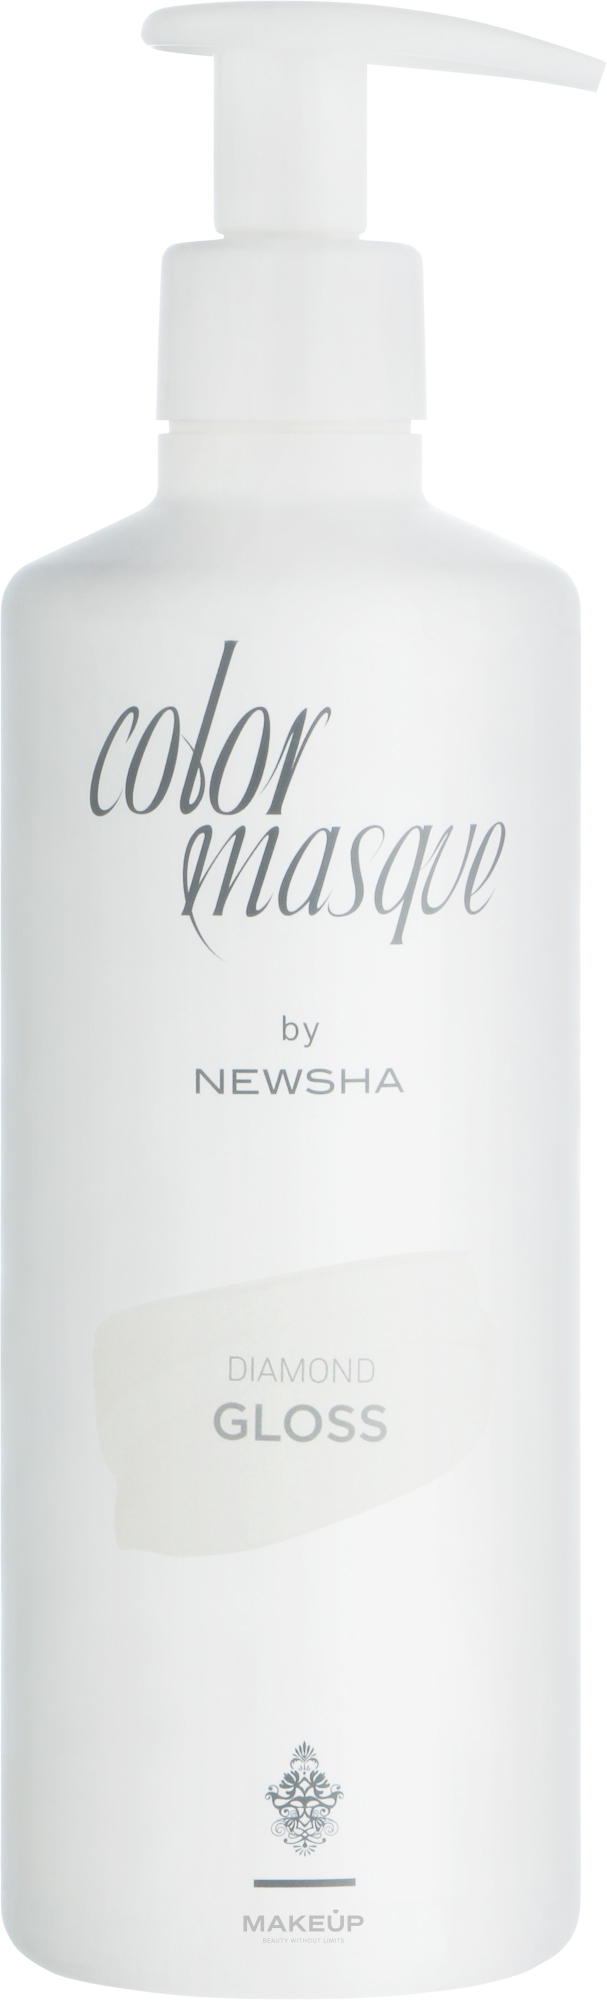 Кольорова маска для волосся - Newsha Color Masque Diamond Gloss — фото 500ml